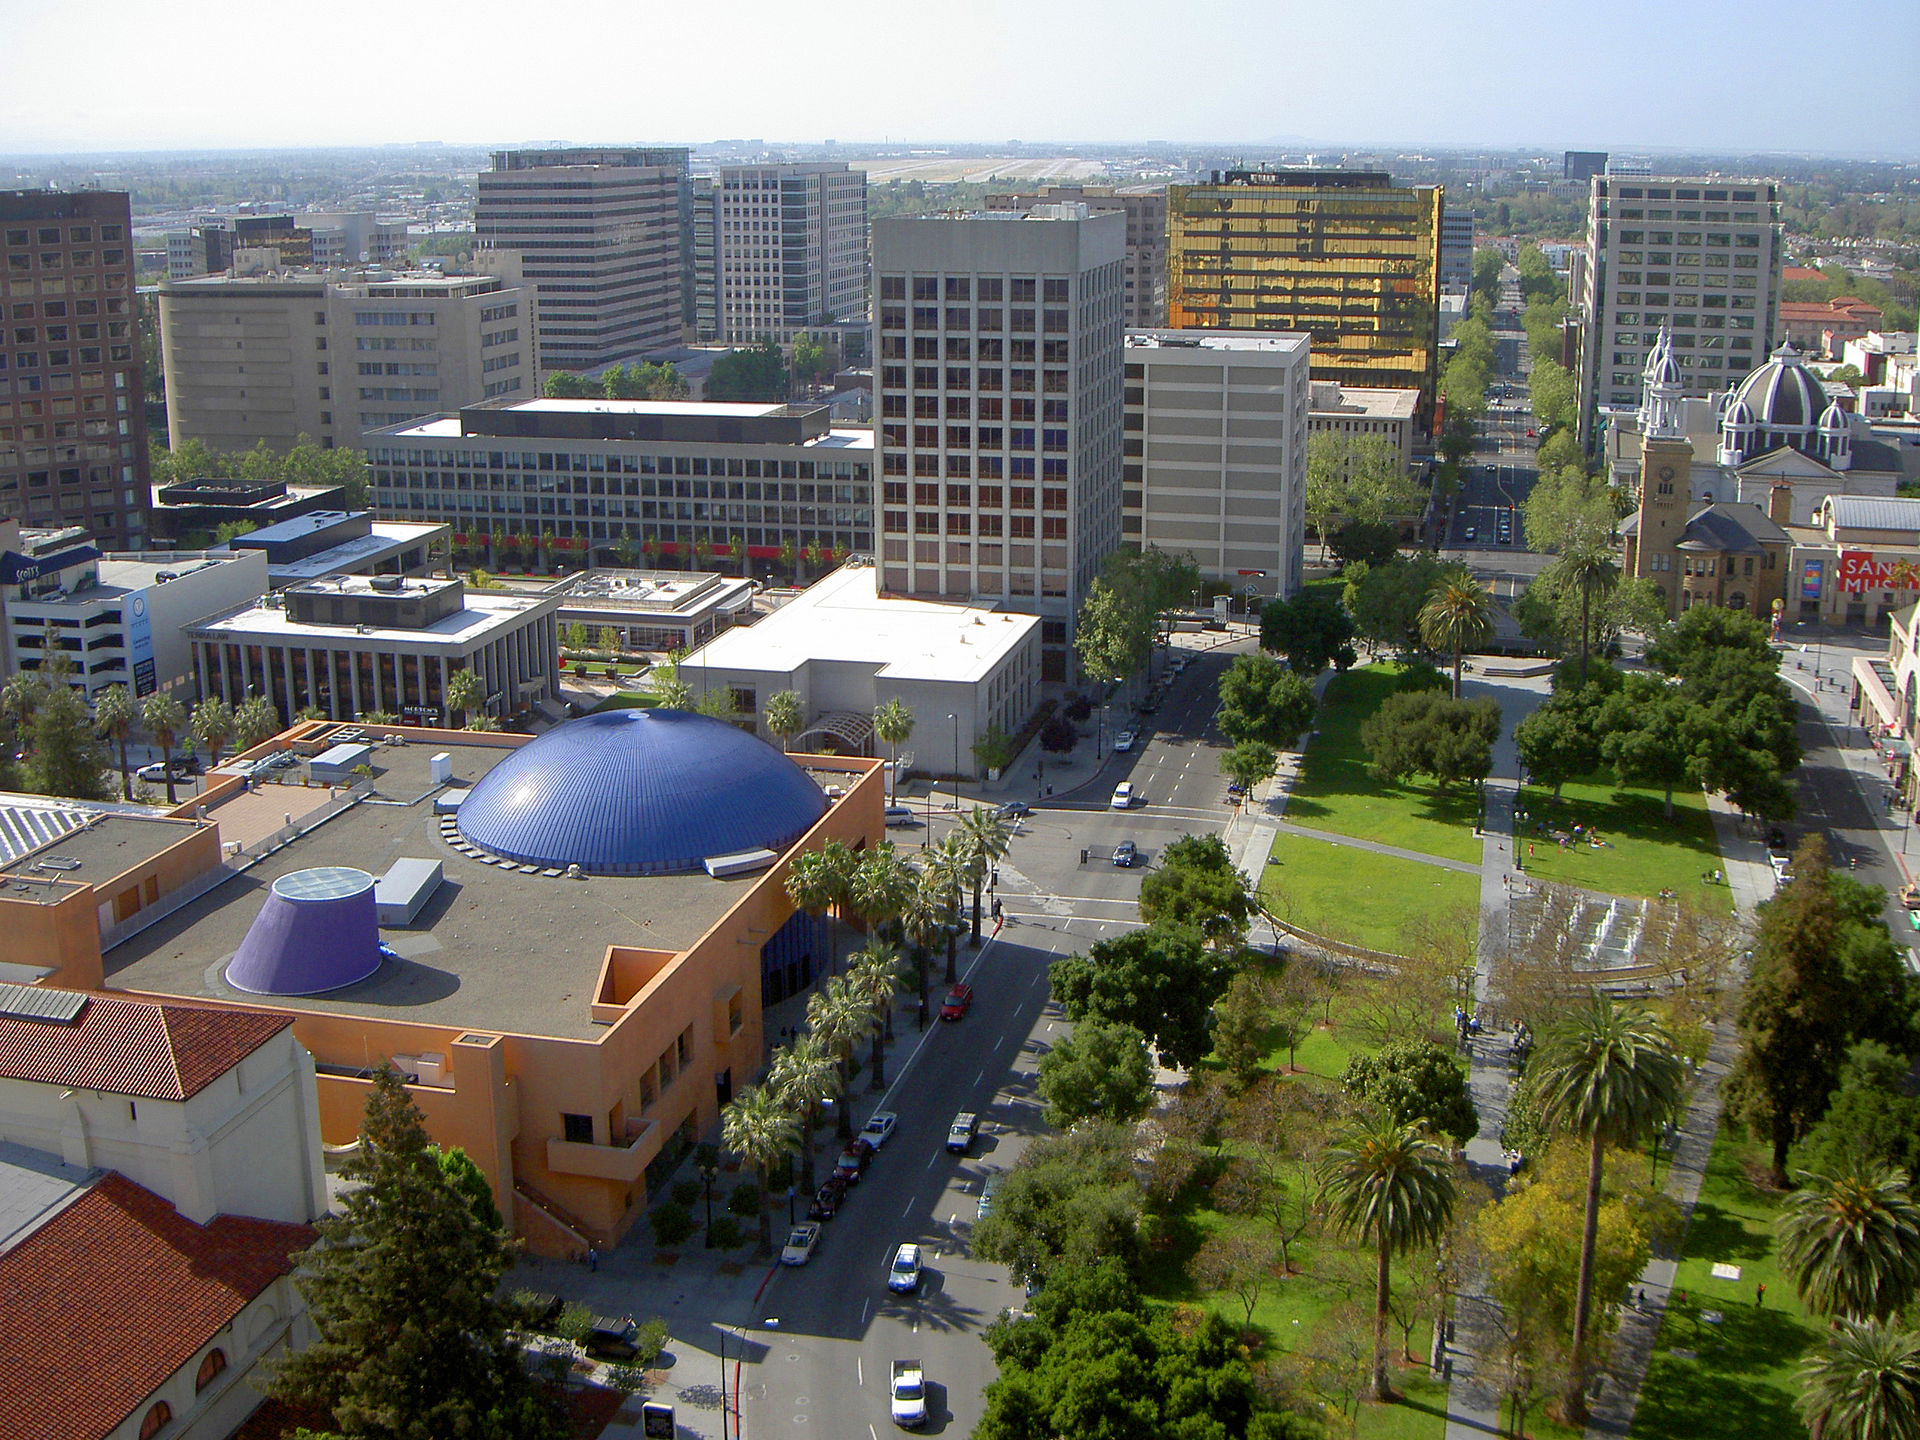 https://en.wikipedia.org/wiki/San_Jose,_California#/media/File:Downtown_san_jose_south_market_st.jpg